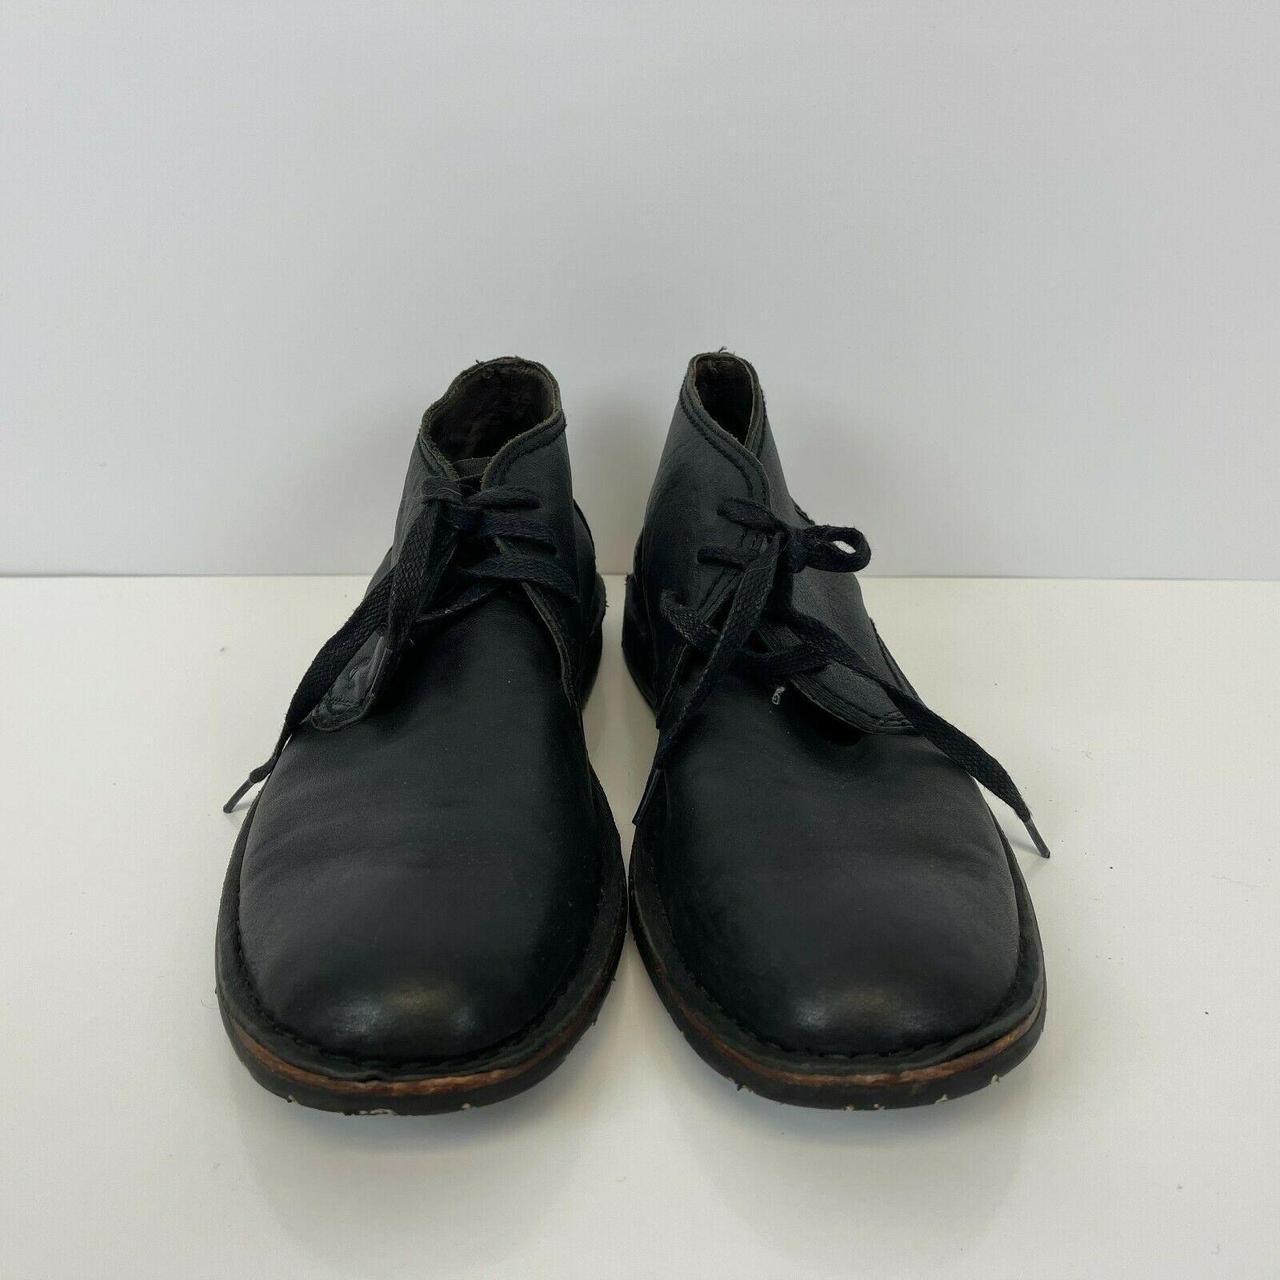 John Varvatos USA Leather Ankle Desert Boots Lace Up... - Depop